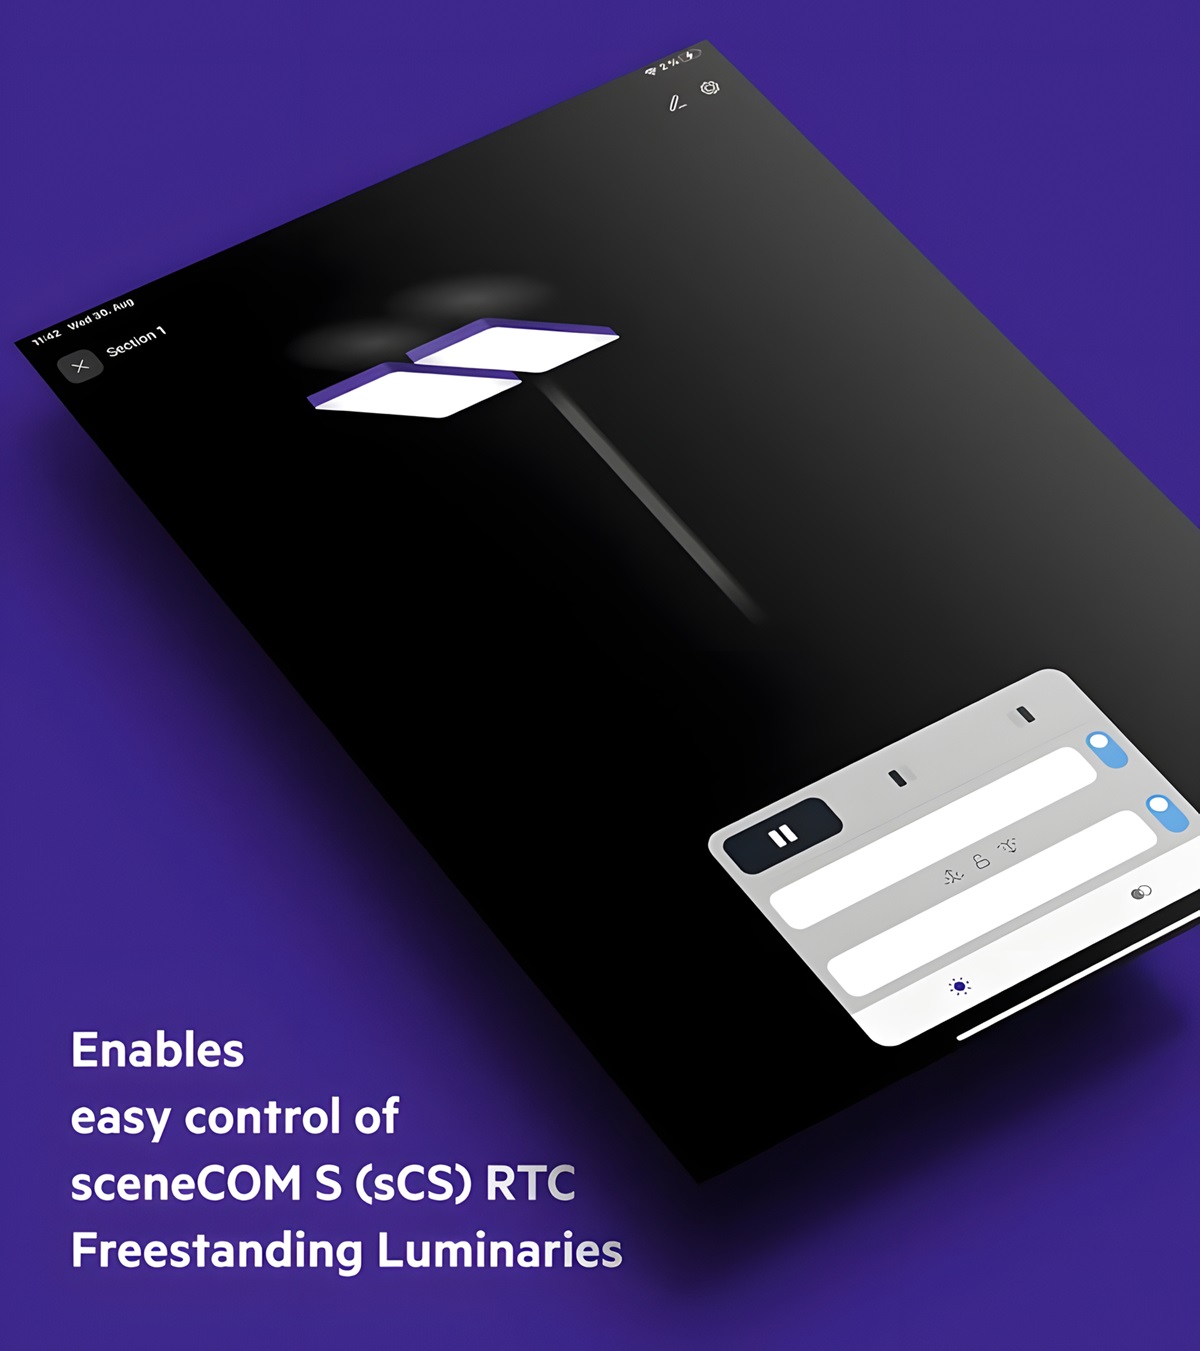 Tridonic Introduces the sceneCOM S Remote App